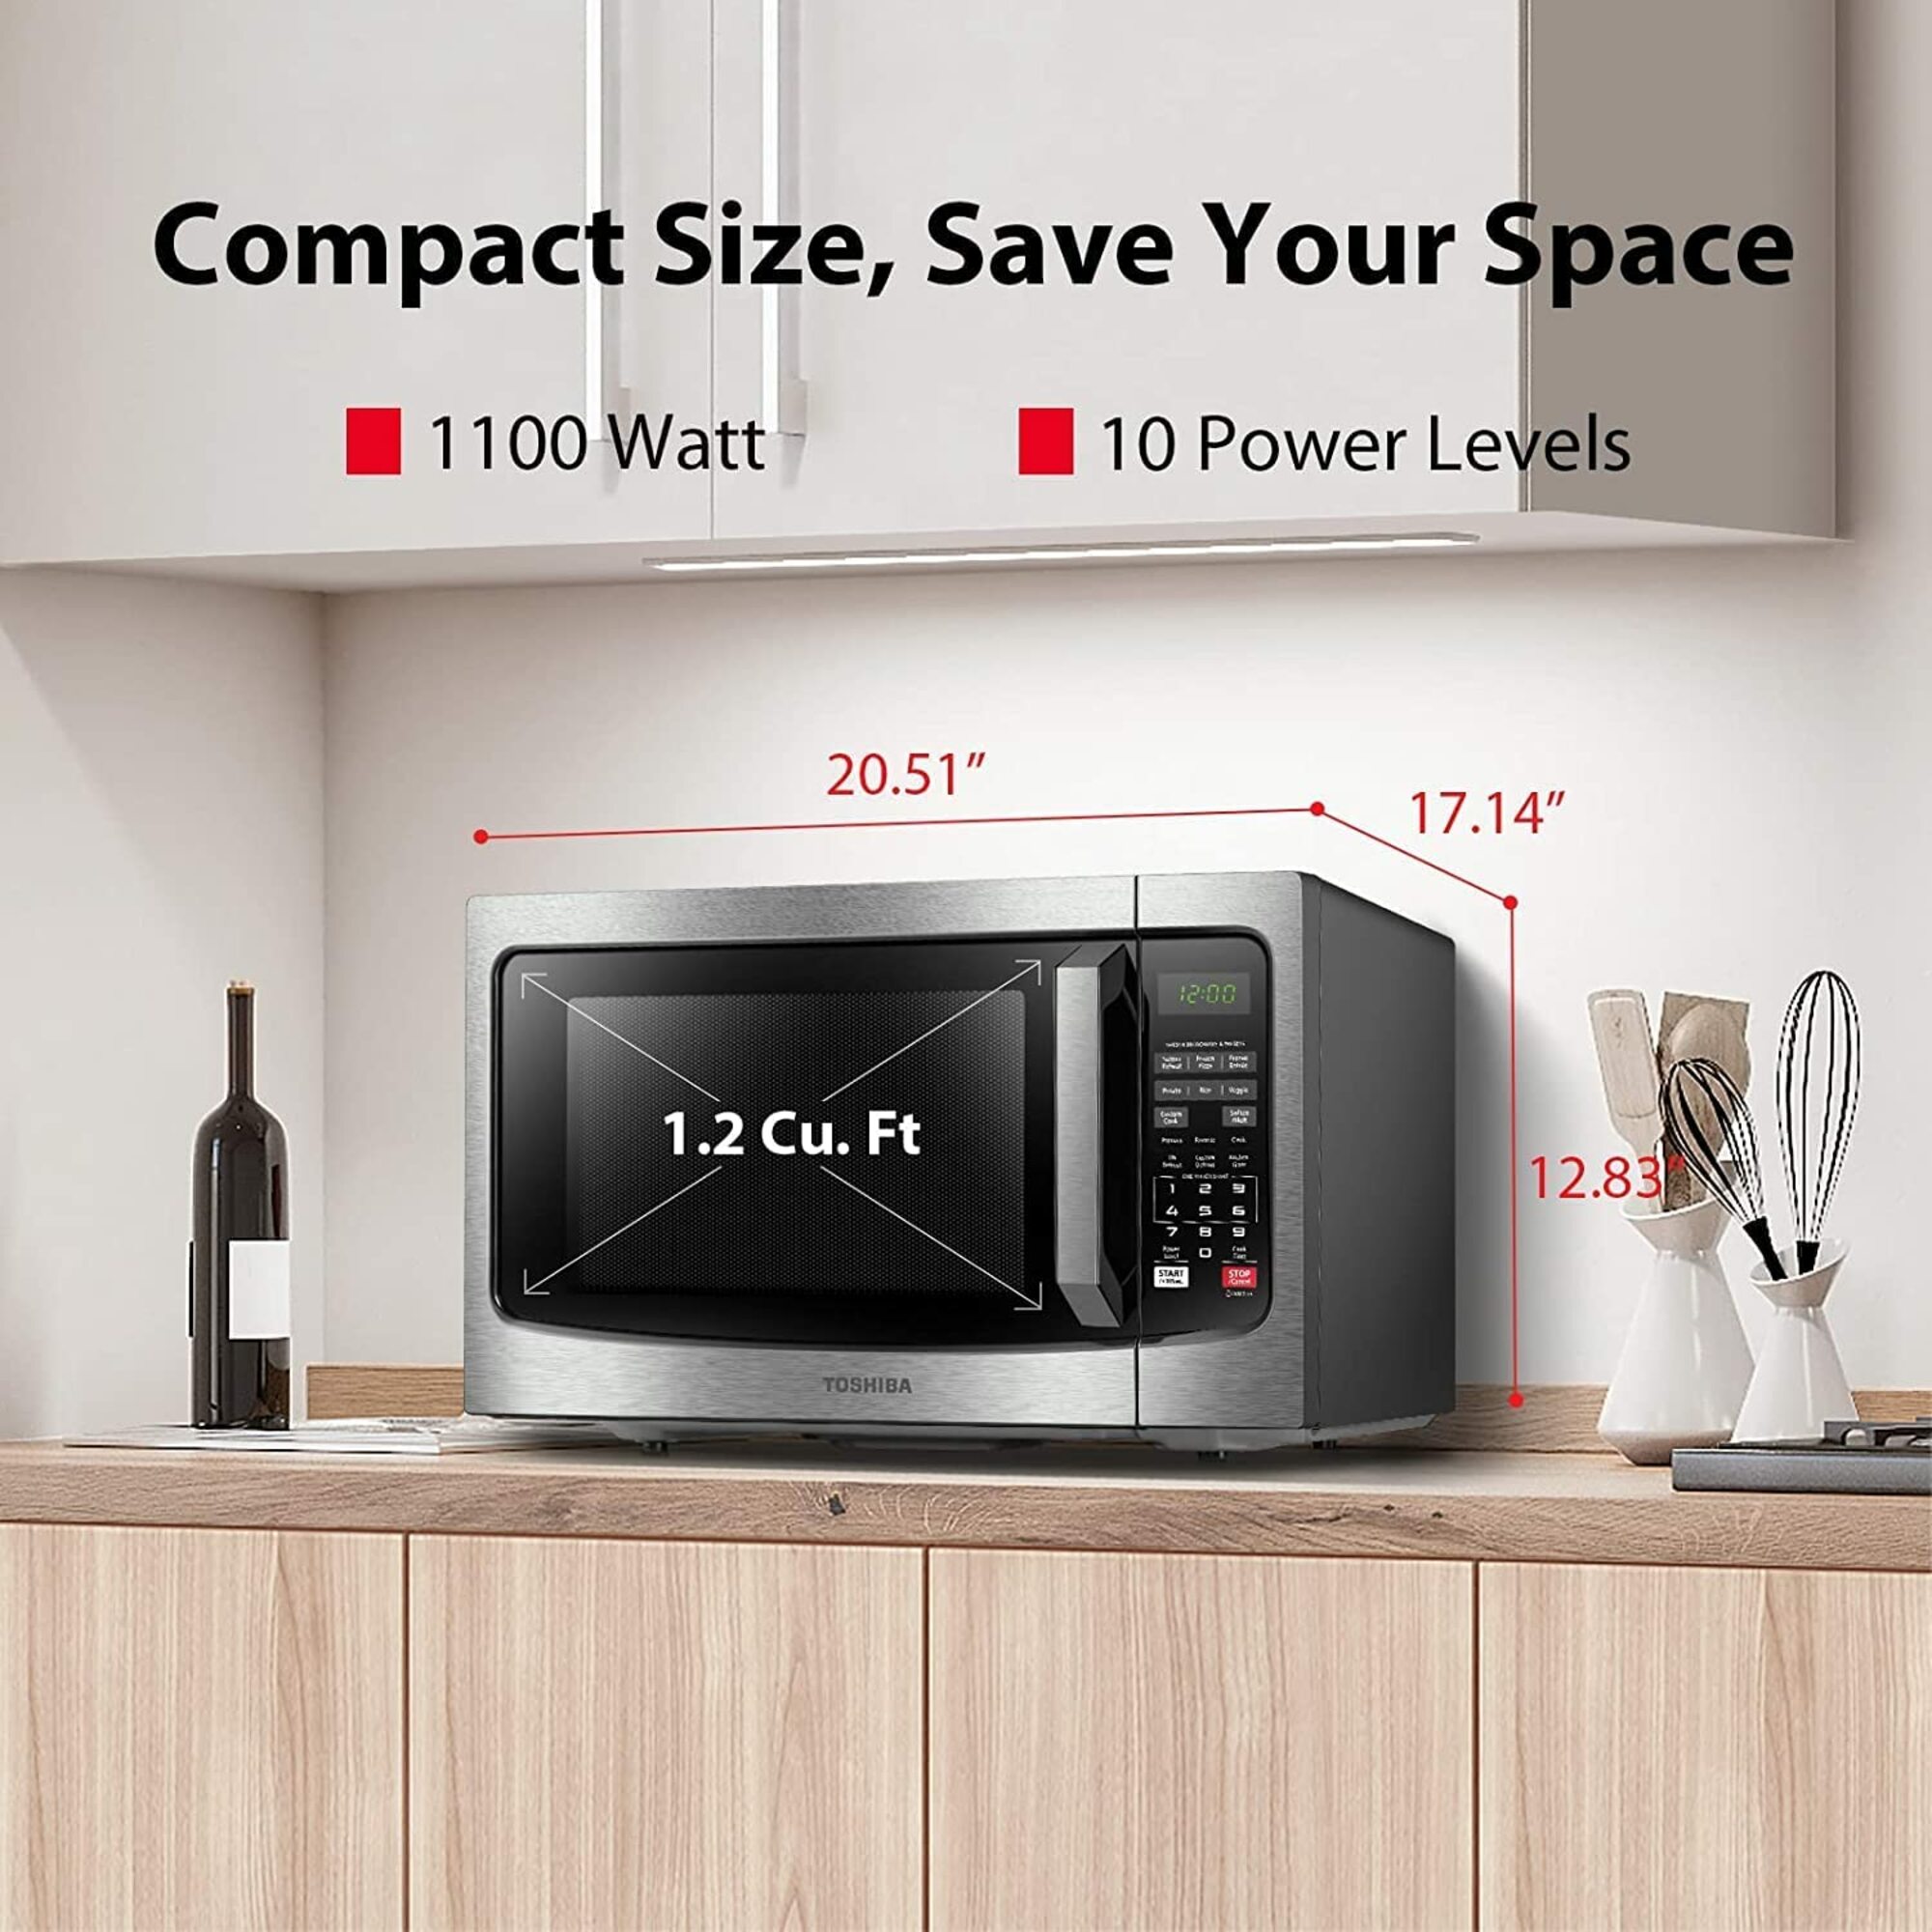 Toshiba 0.9 Cu. ft. Microwave, Stainless Steel, EM925A5A-CHSS